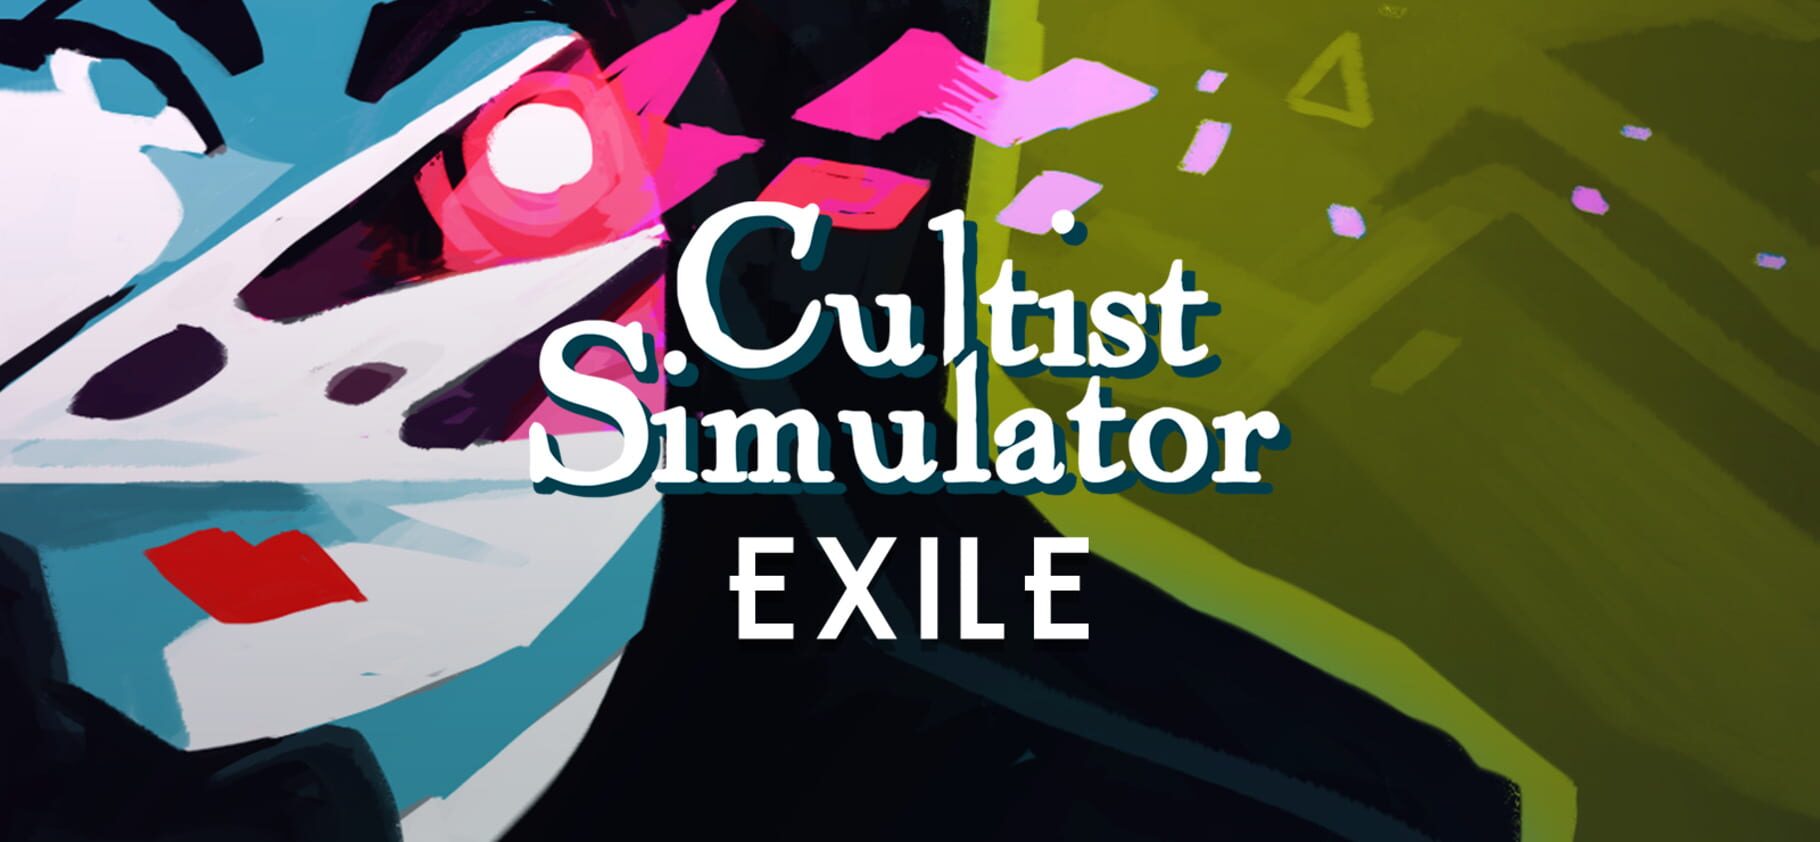 Cultist Simulator: The Exile artwork